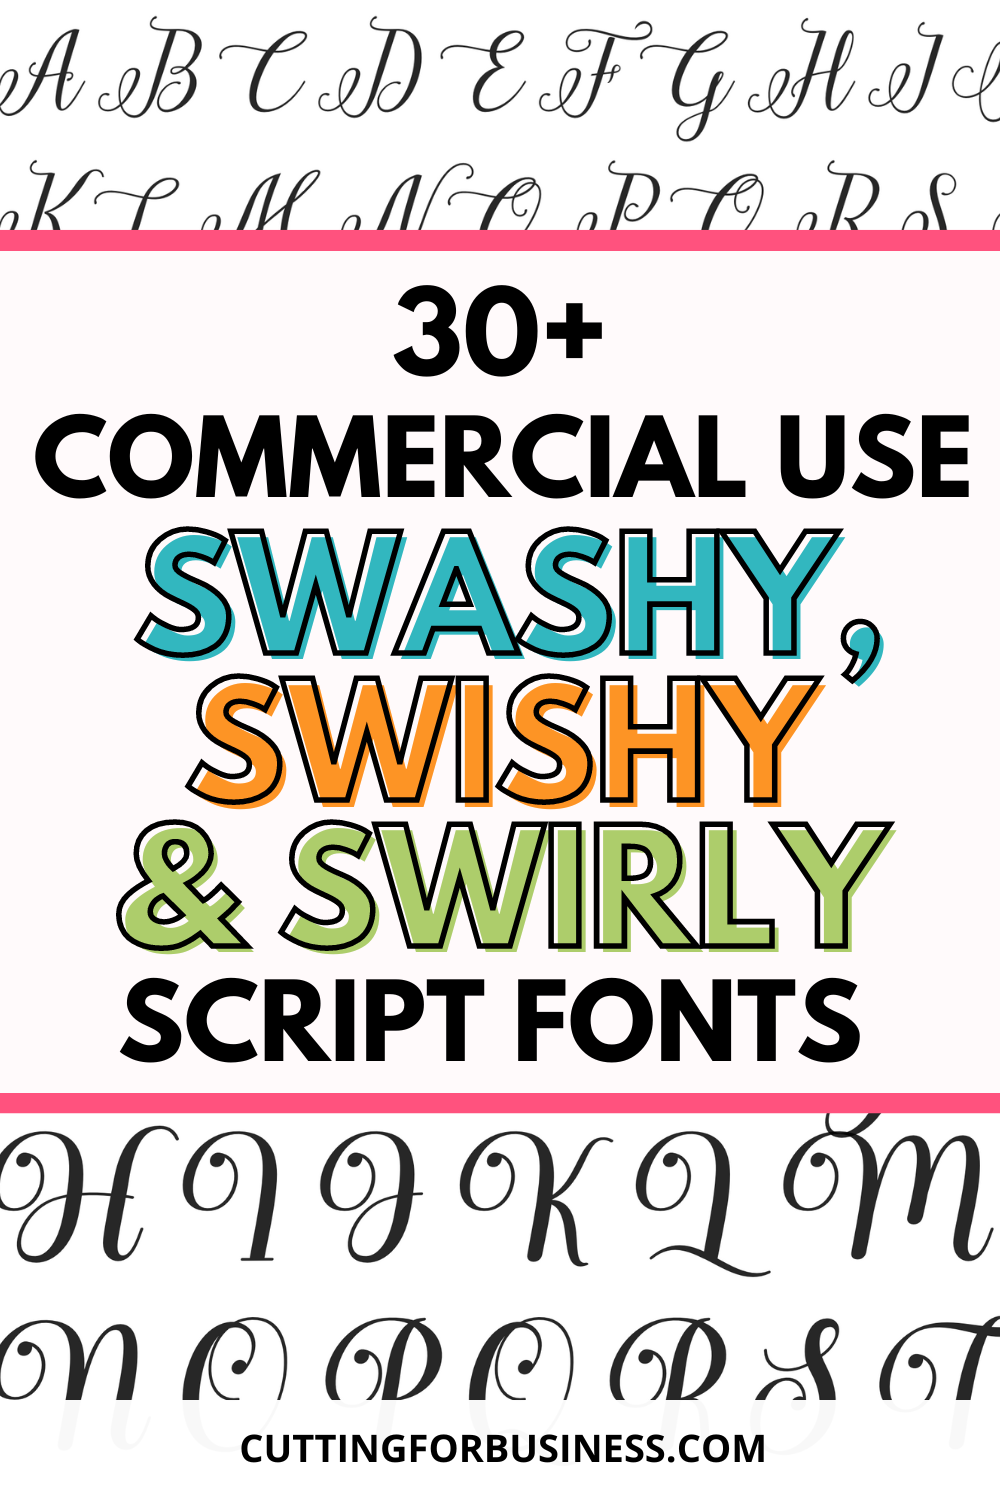 30+ Commercial Use Script Fonts - cuttingforbusiness.com